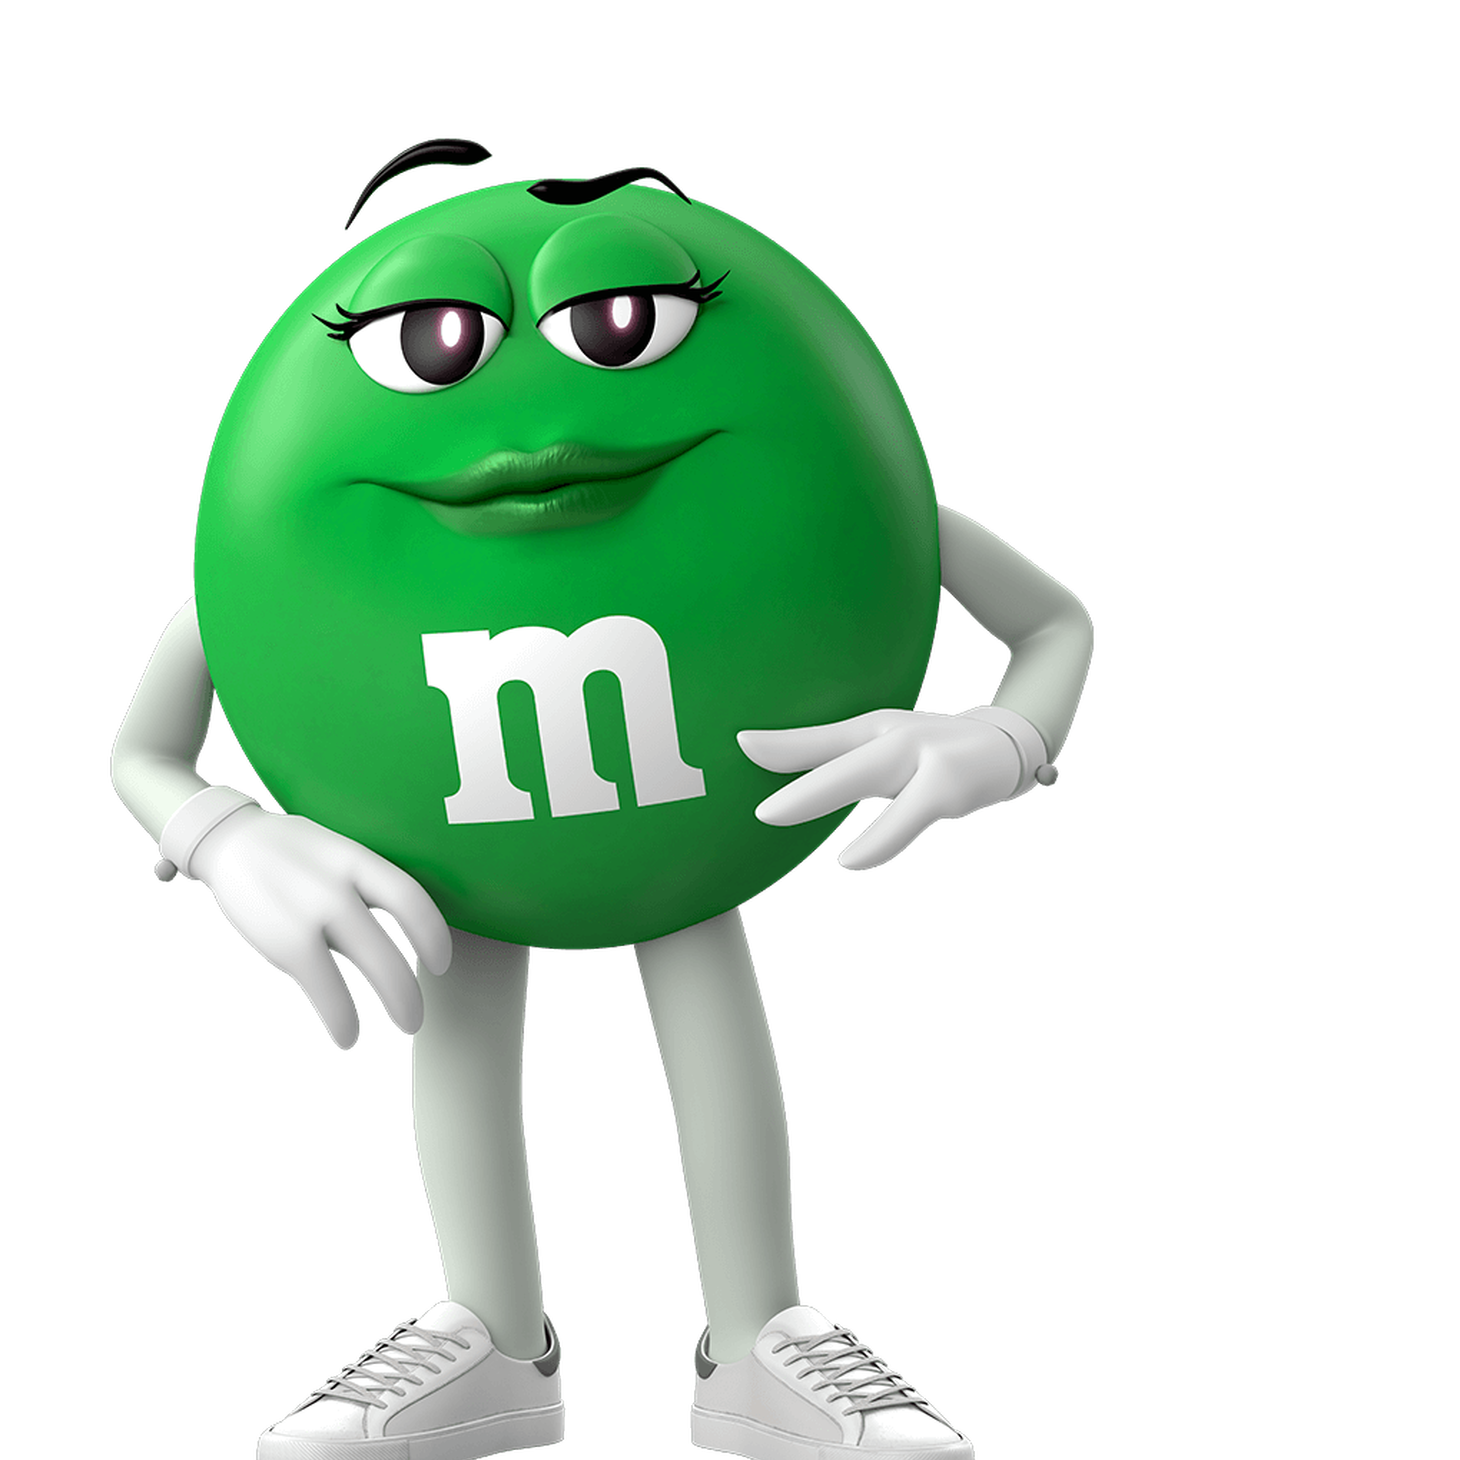 Green character